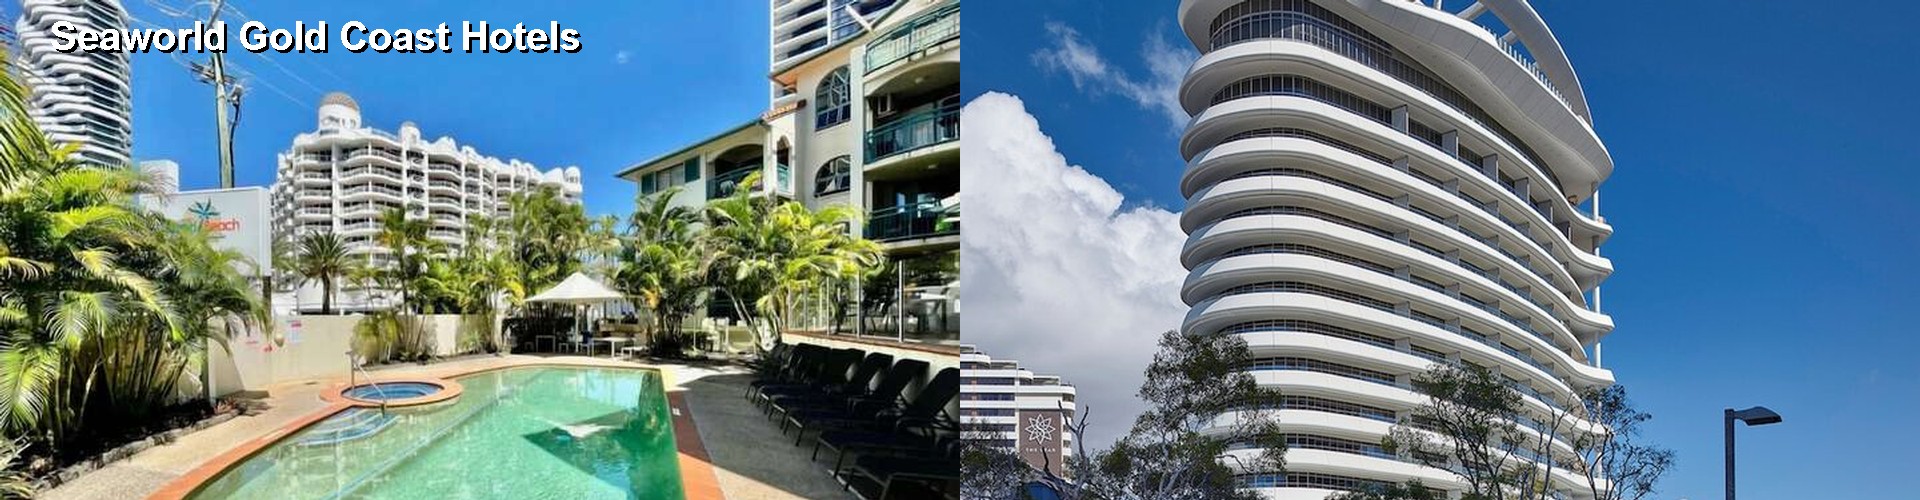 5 Best Hotels near Seaworld Gold Coast